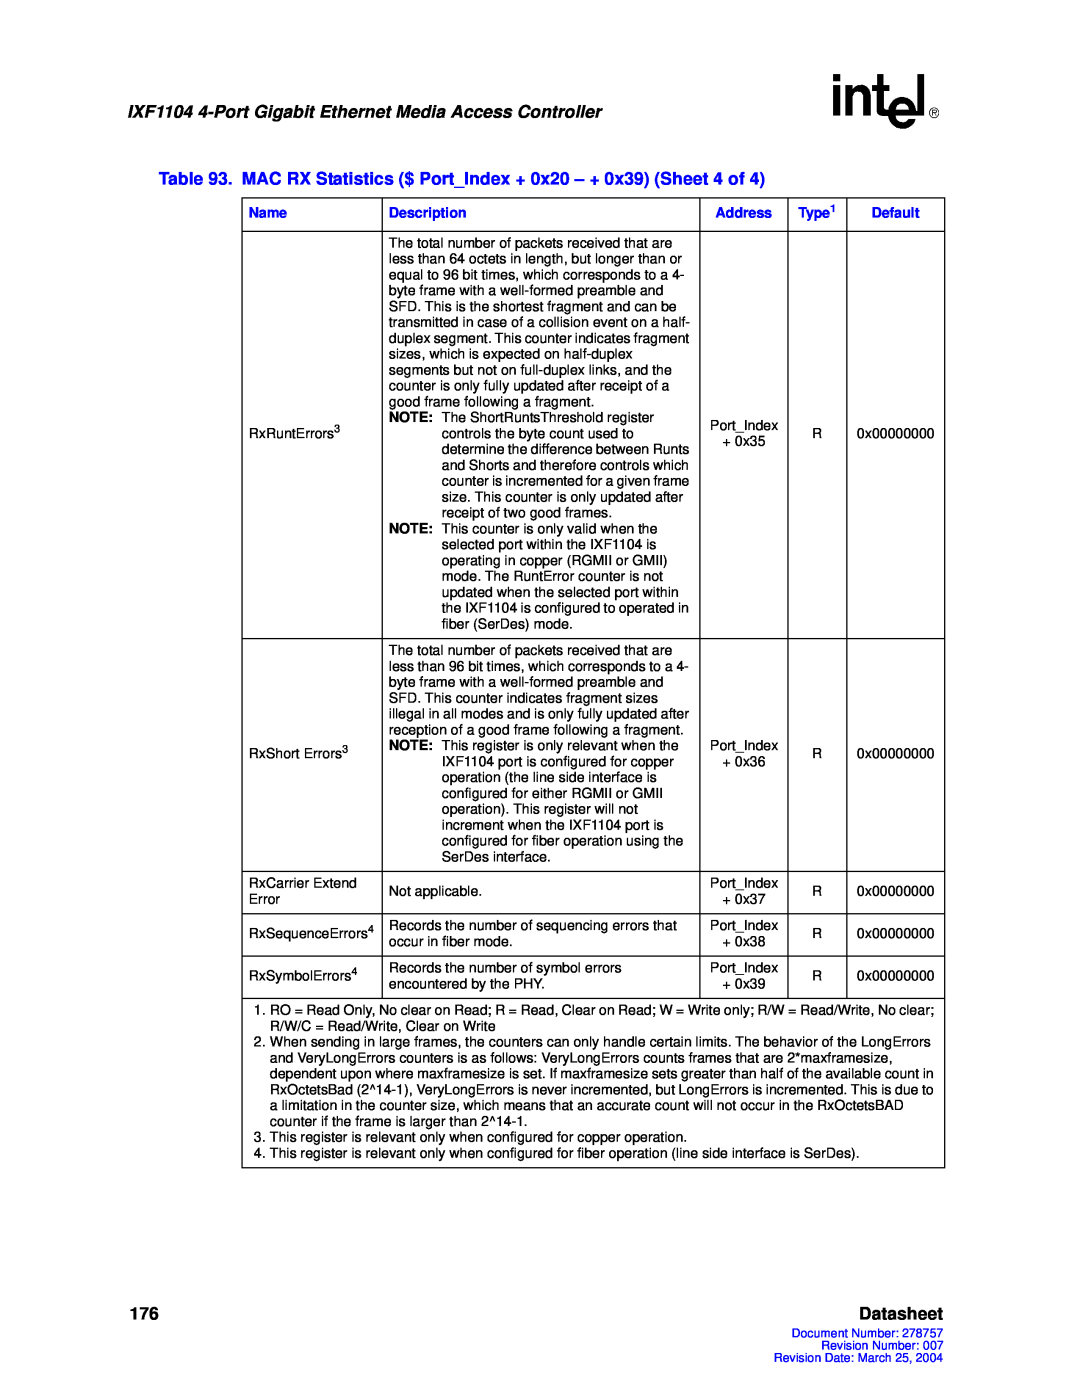 Intel IXF1104 manual Datasheet 